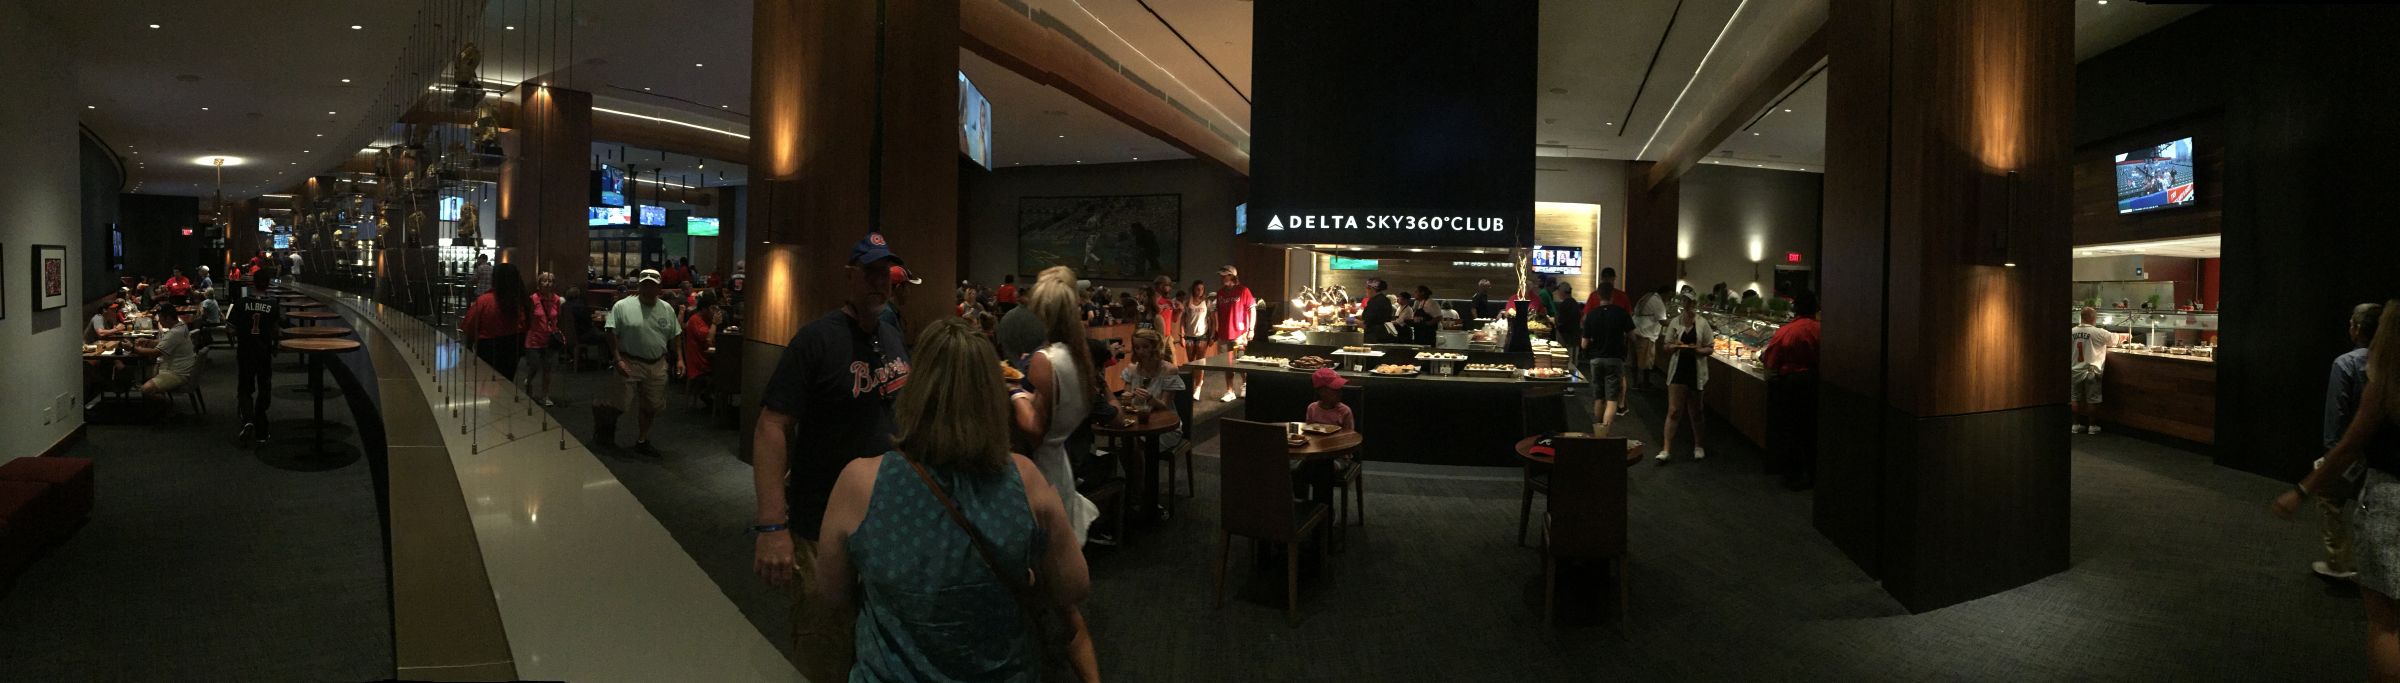 Photos: The new Braves stadium's Delta SKY360 Club